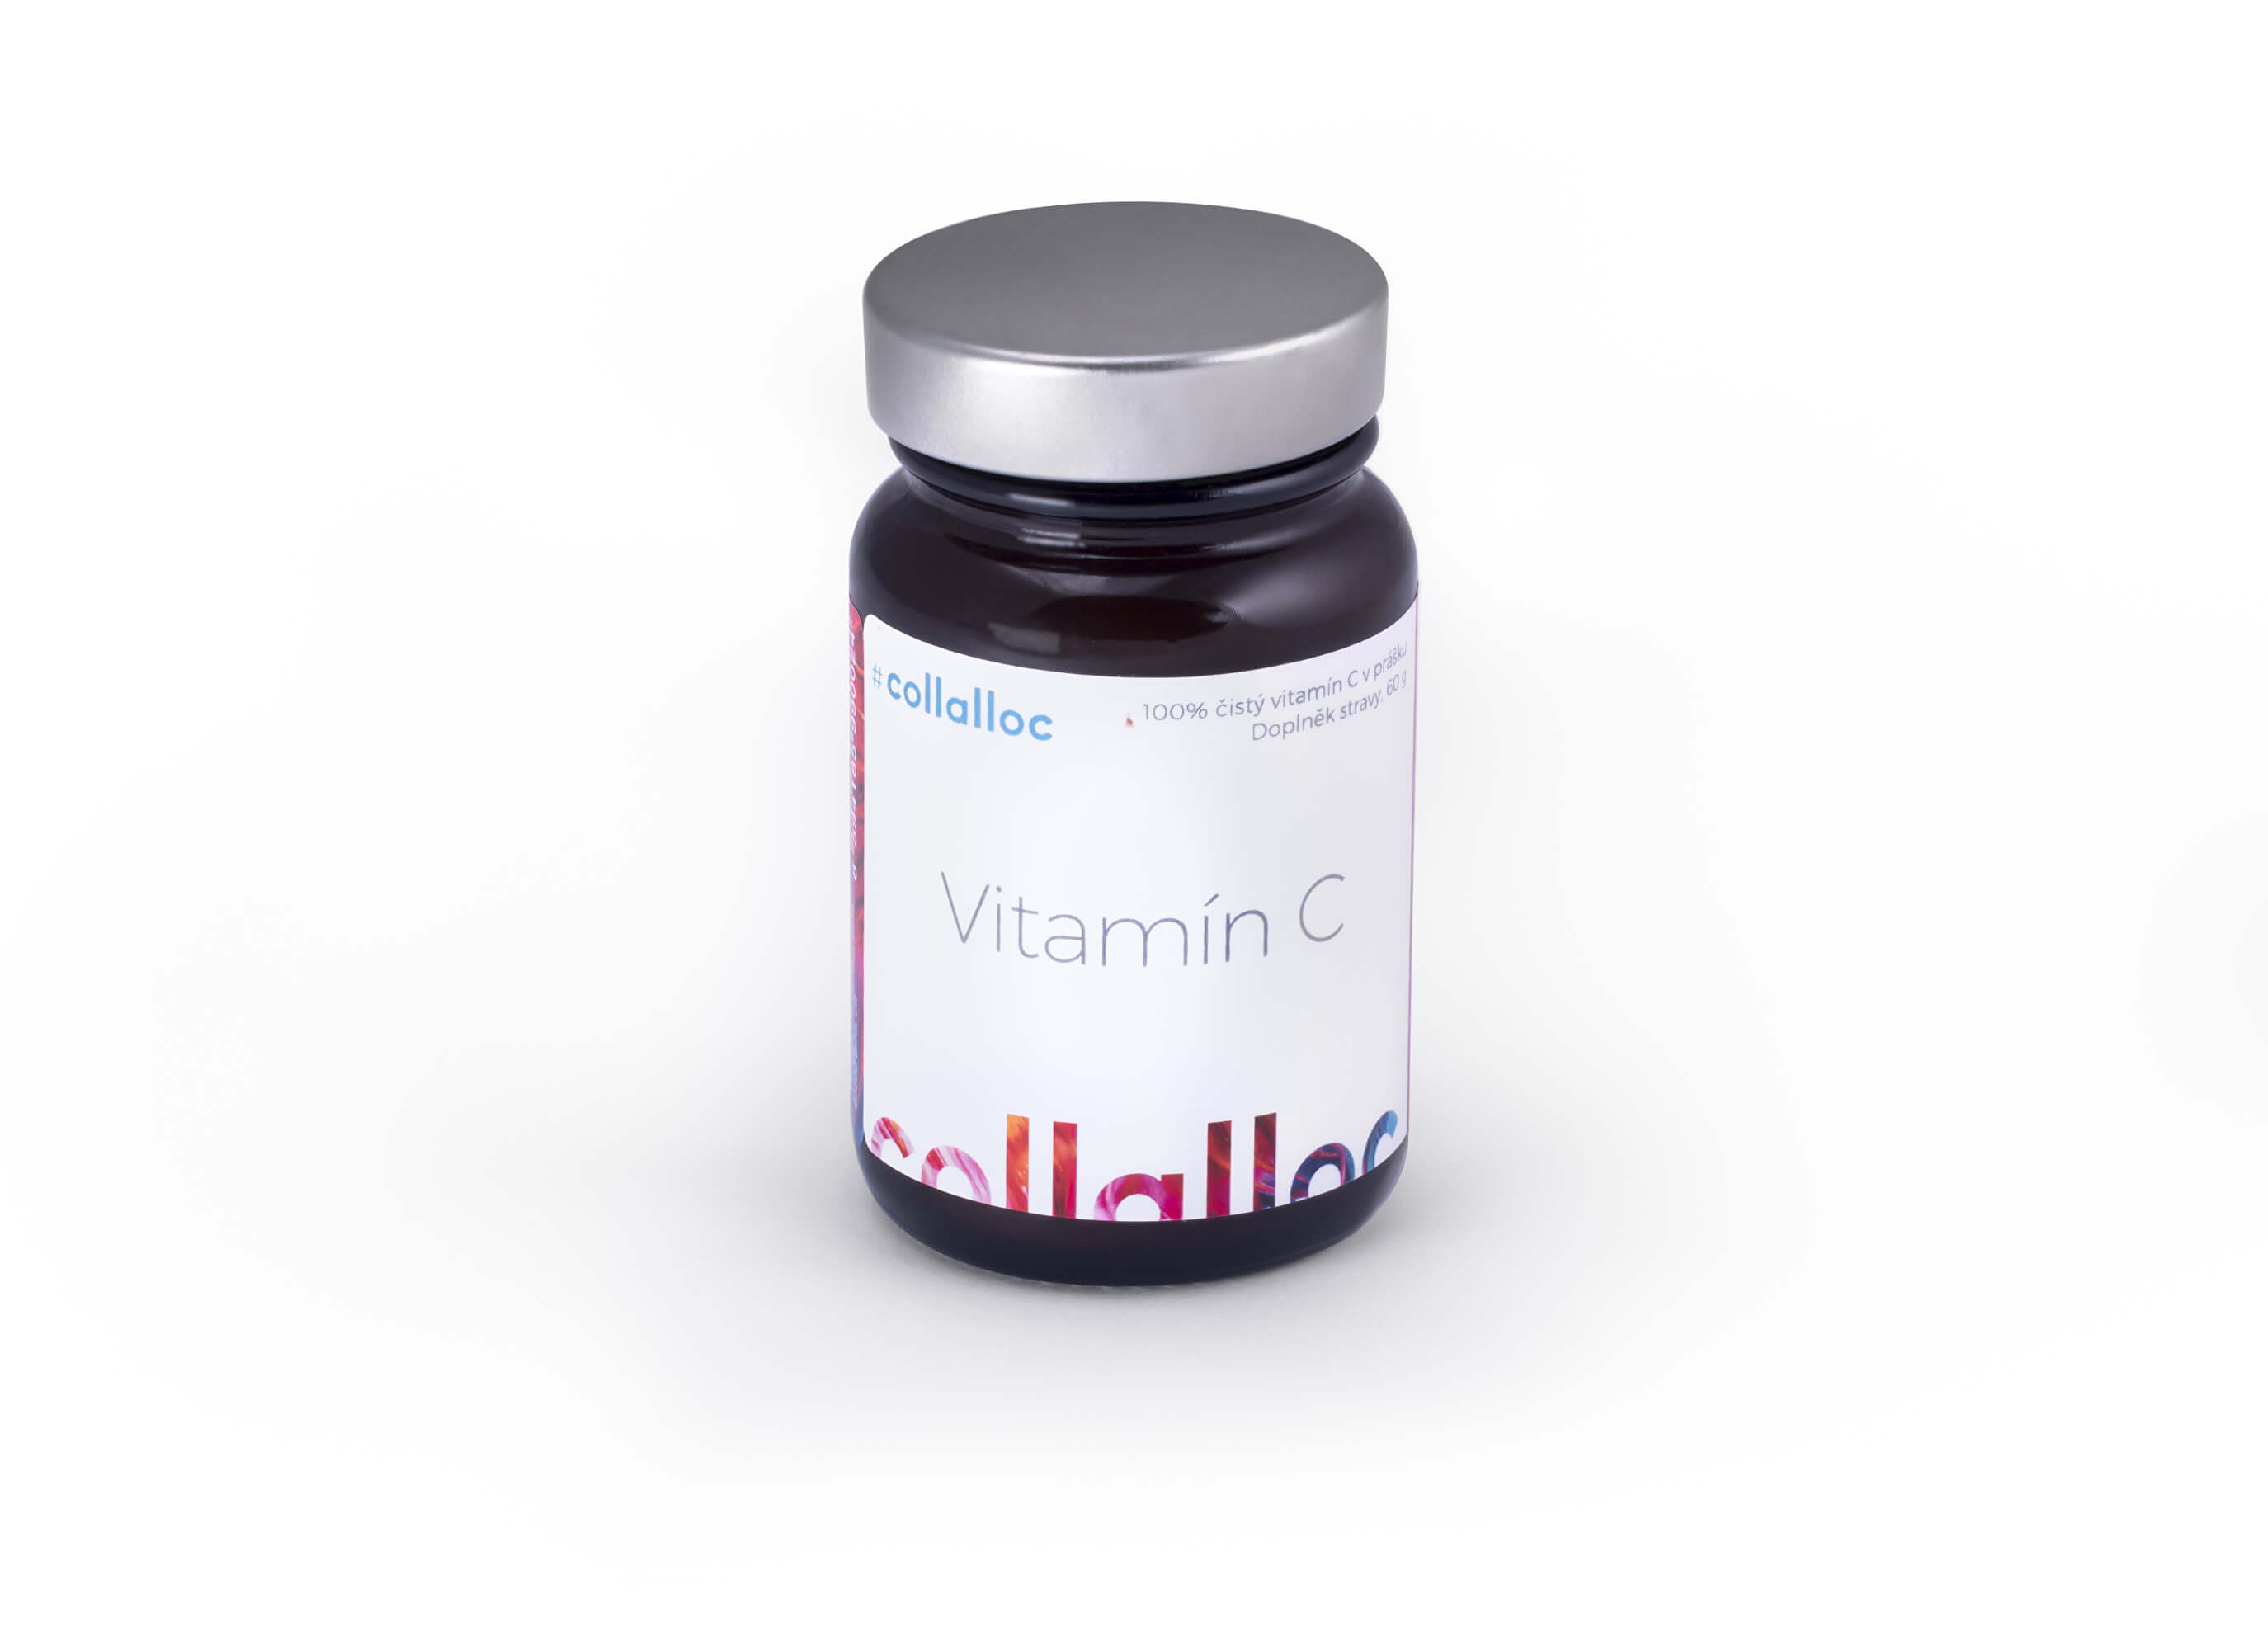 Zobrazit detail výrobku Collalloc Collalloc Vitamin C 60 g